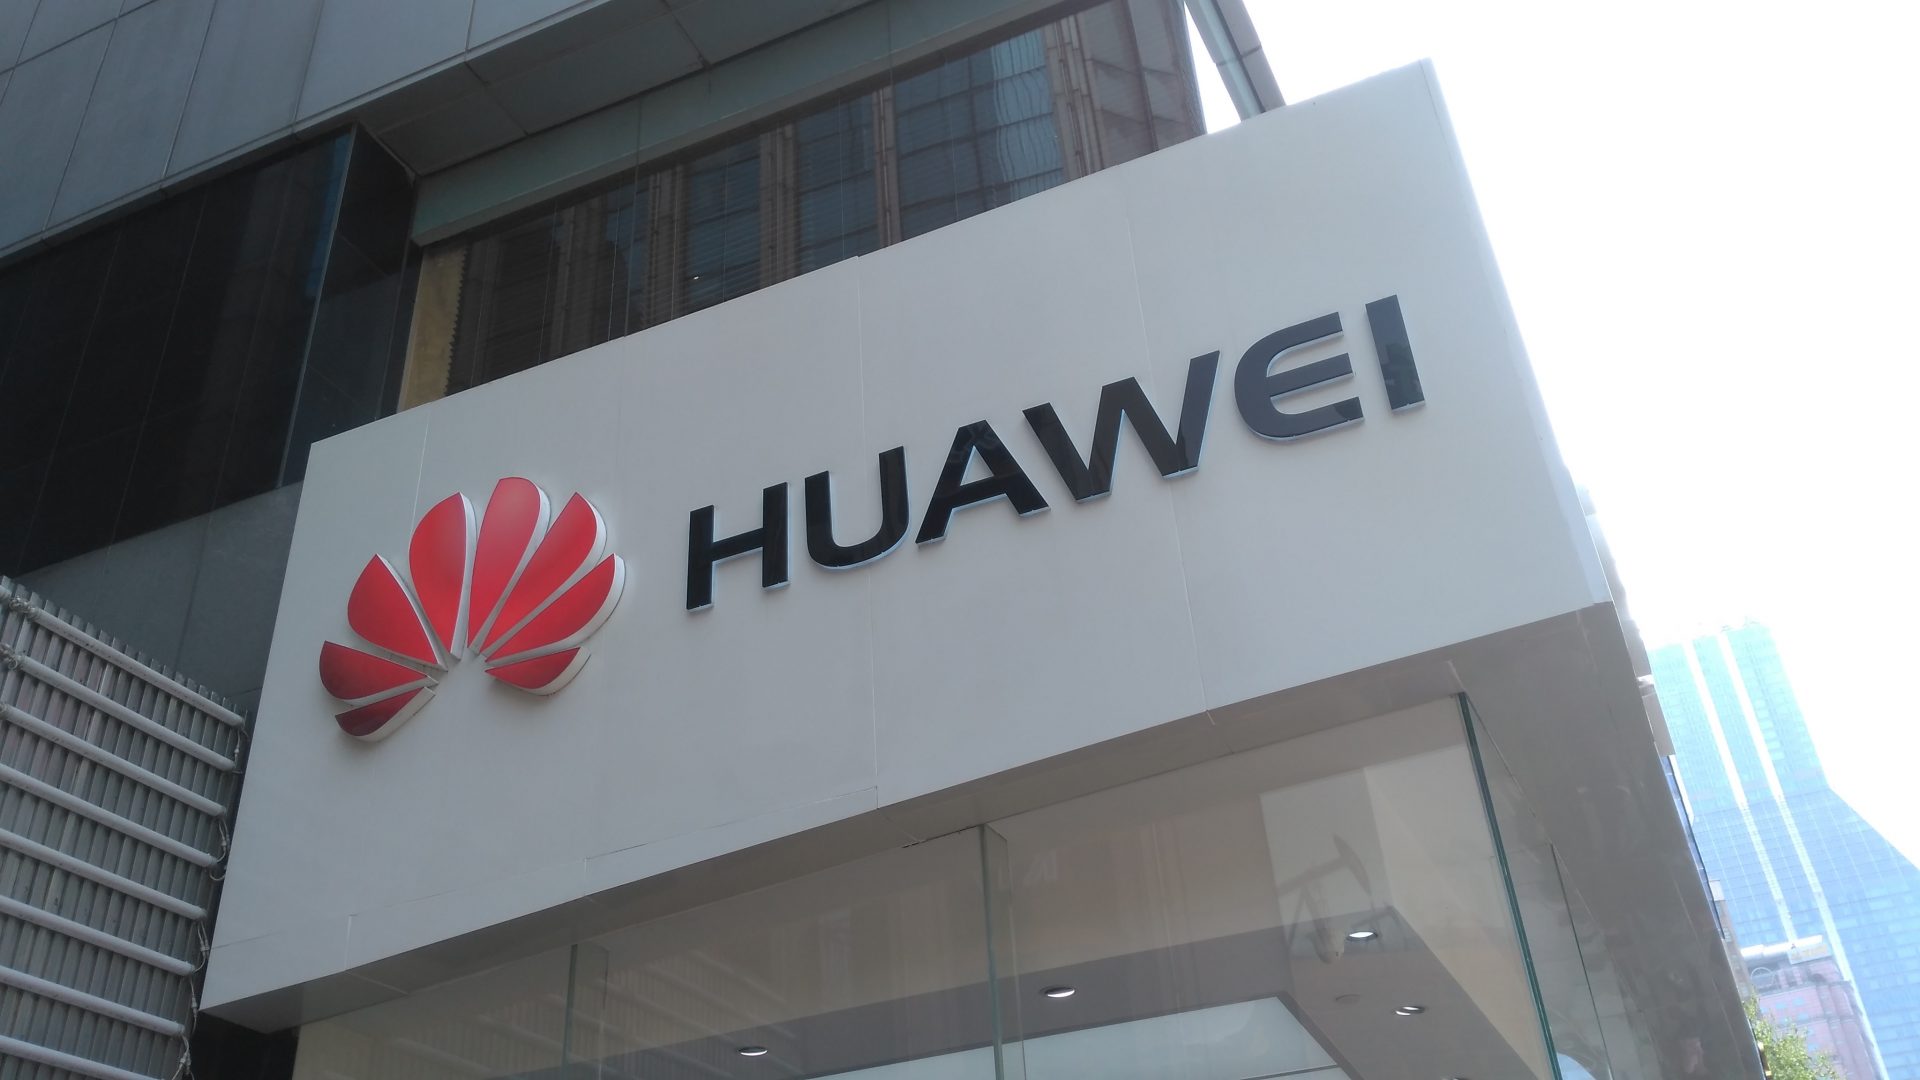 Huawei ยืนยัน จะปิดบริษัทหากรัฐบาลจีนขอดักเก็บข้อมูล